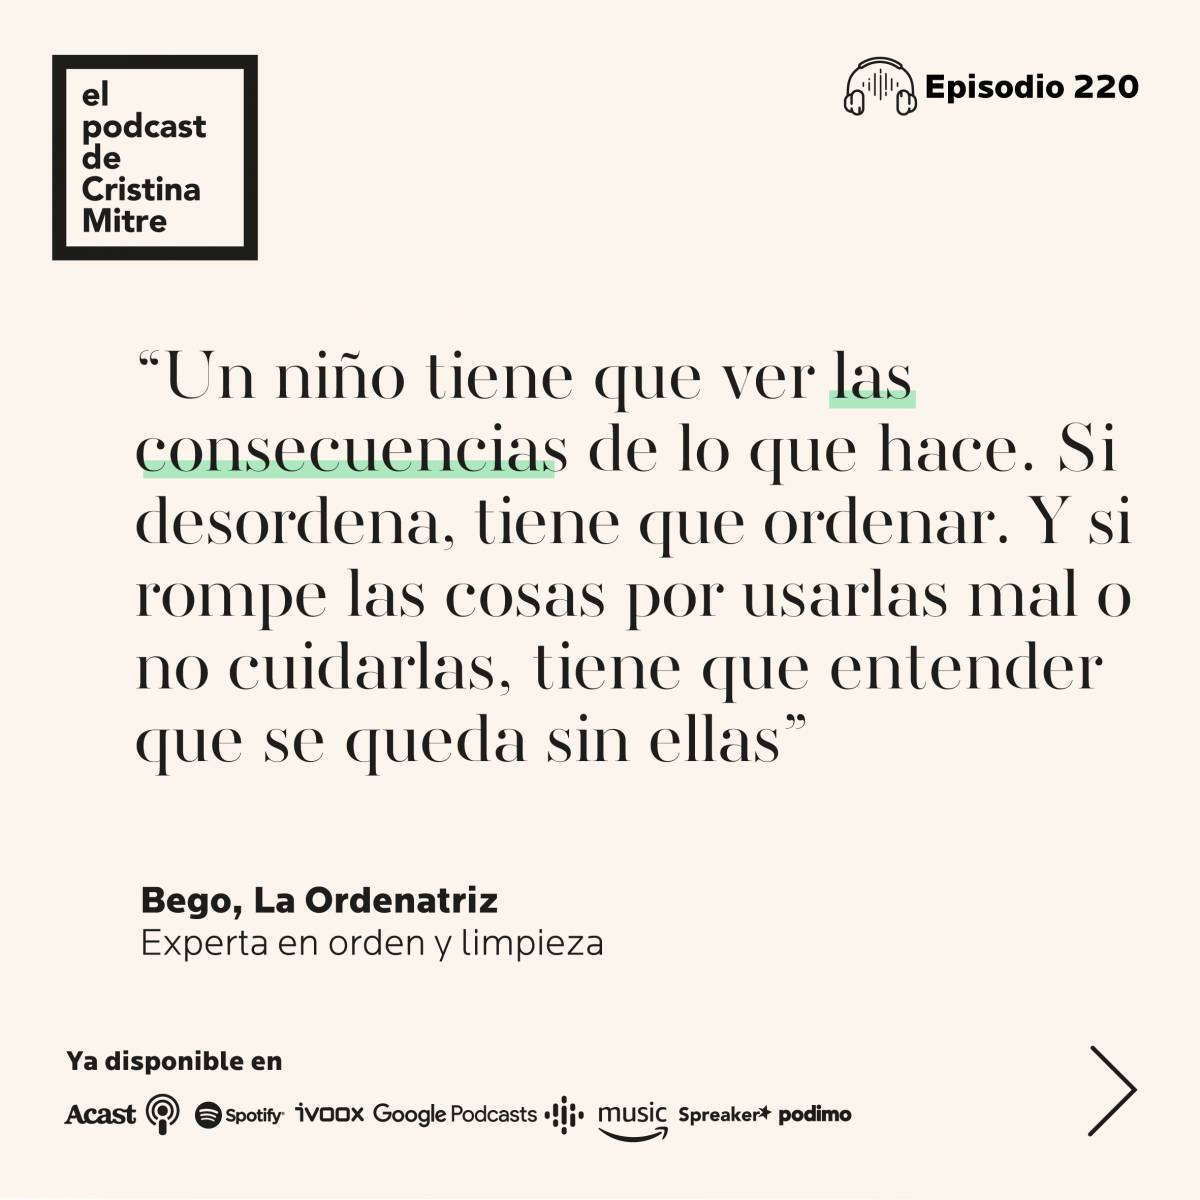 El podcast de Cristina Mitre La ordenatriz limpieza